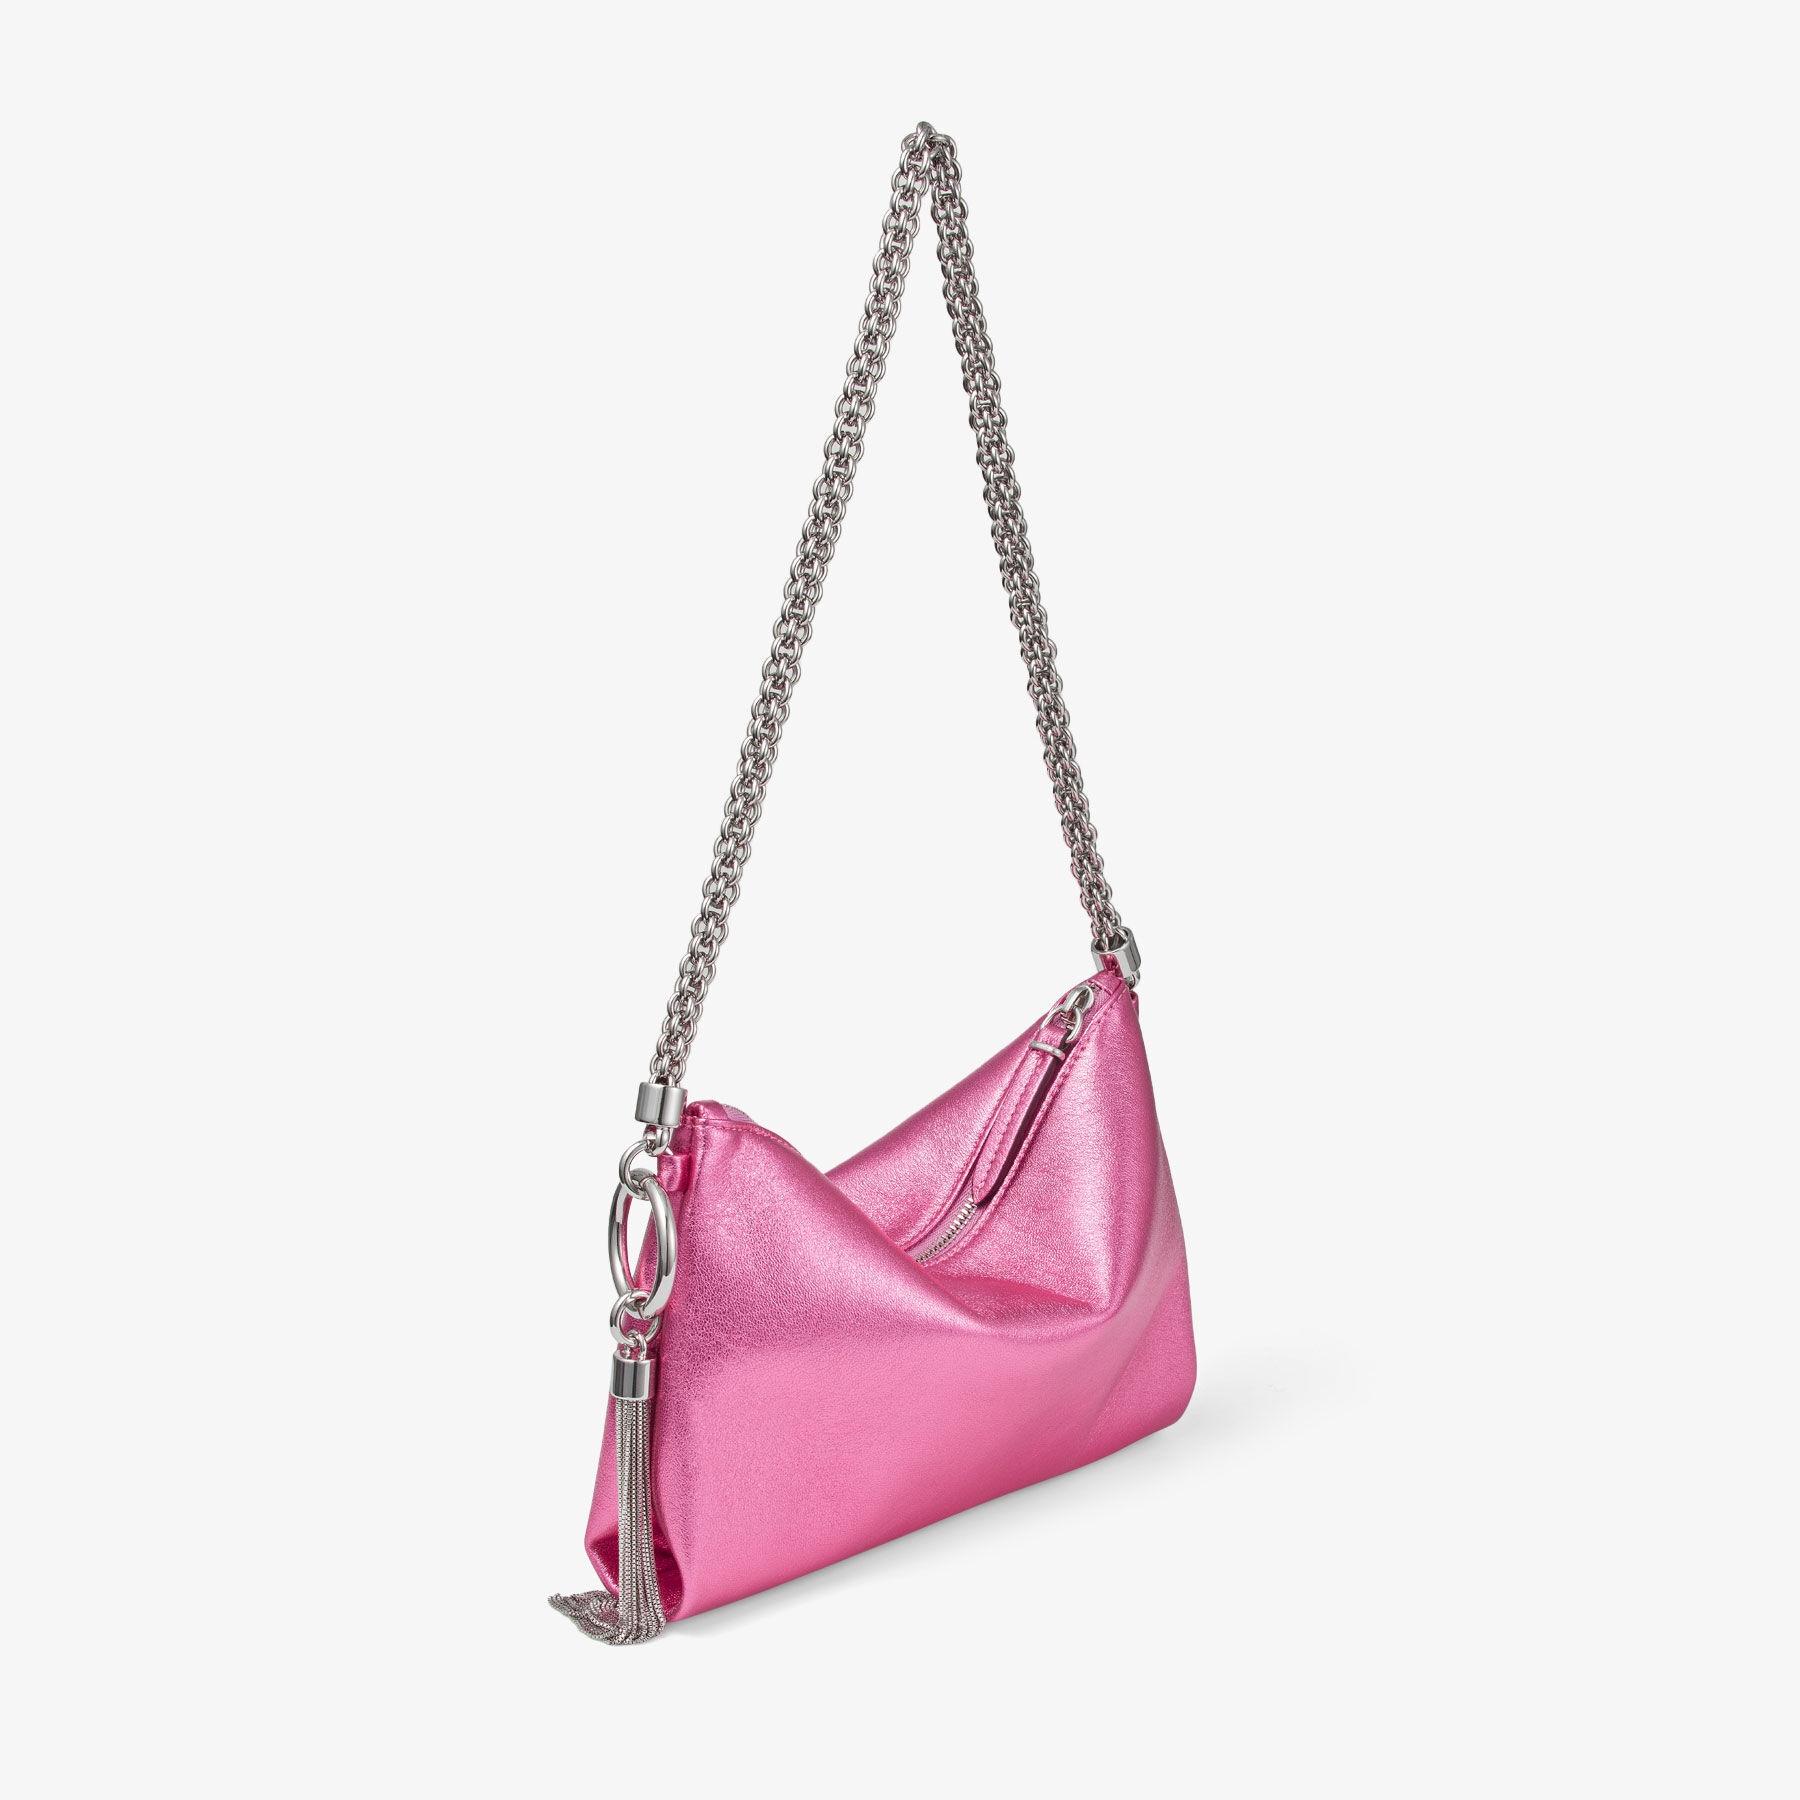 Callie Mini
Candy Pink Metallic Nappa Leather Mini Clutch Bag - 7